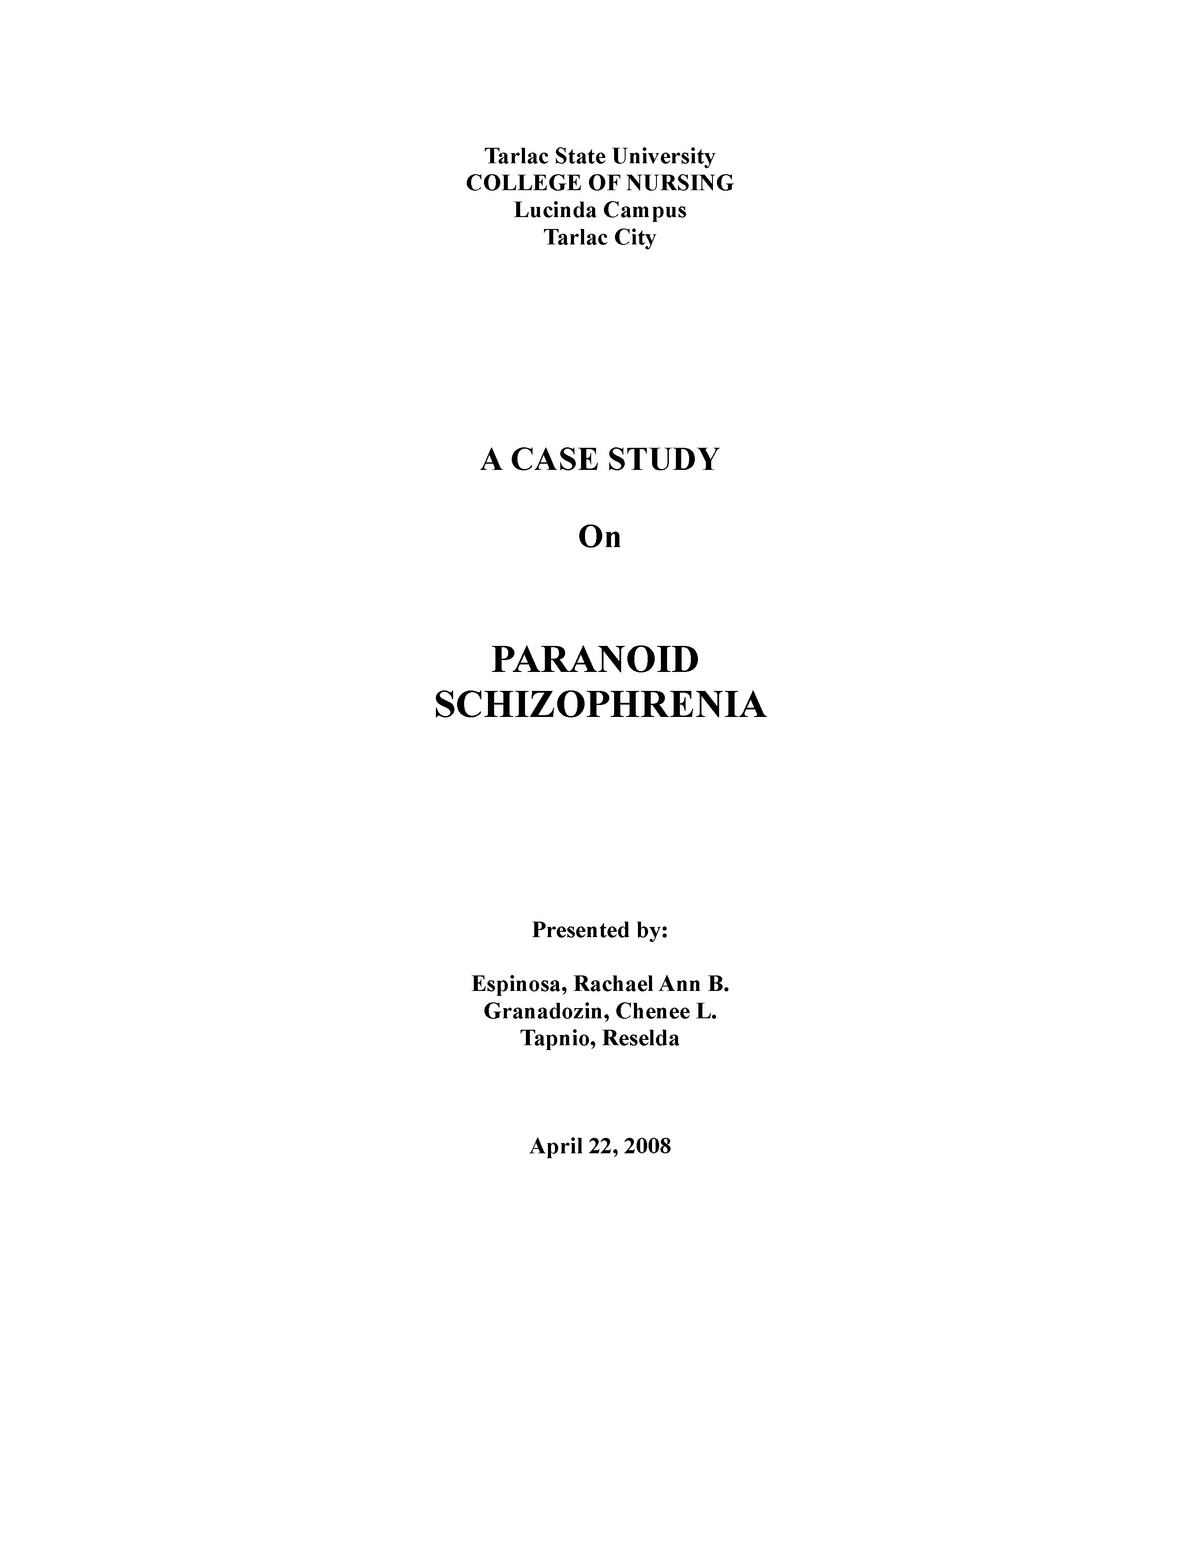 psychiatric case study paranoid schizophrenia